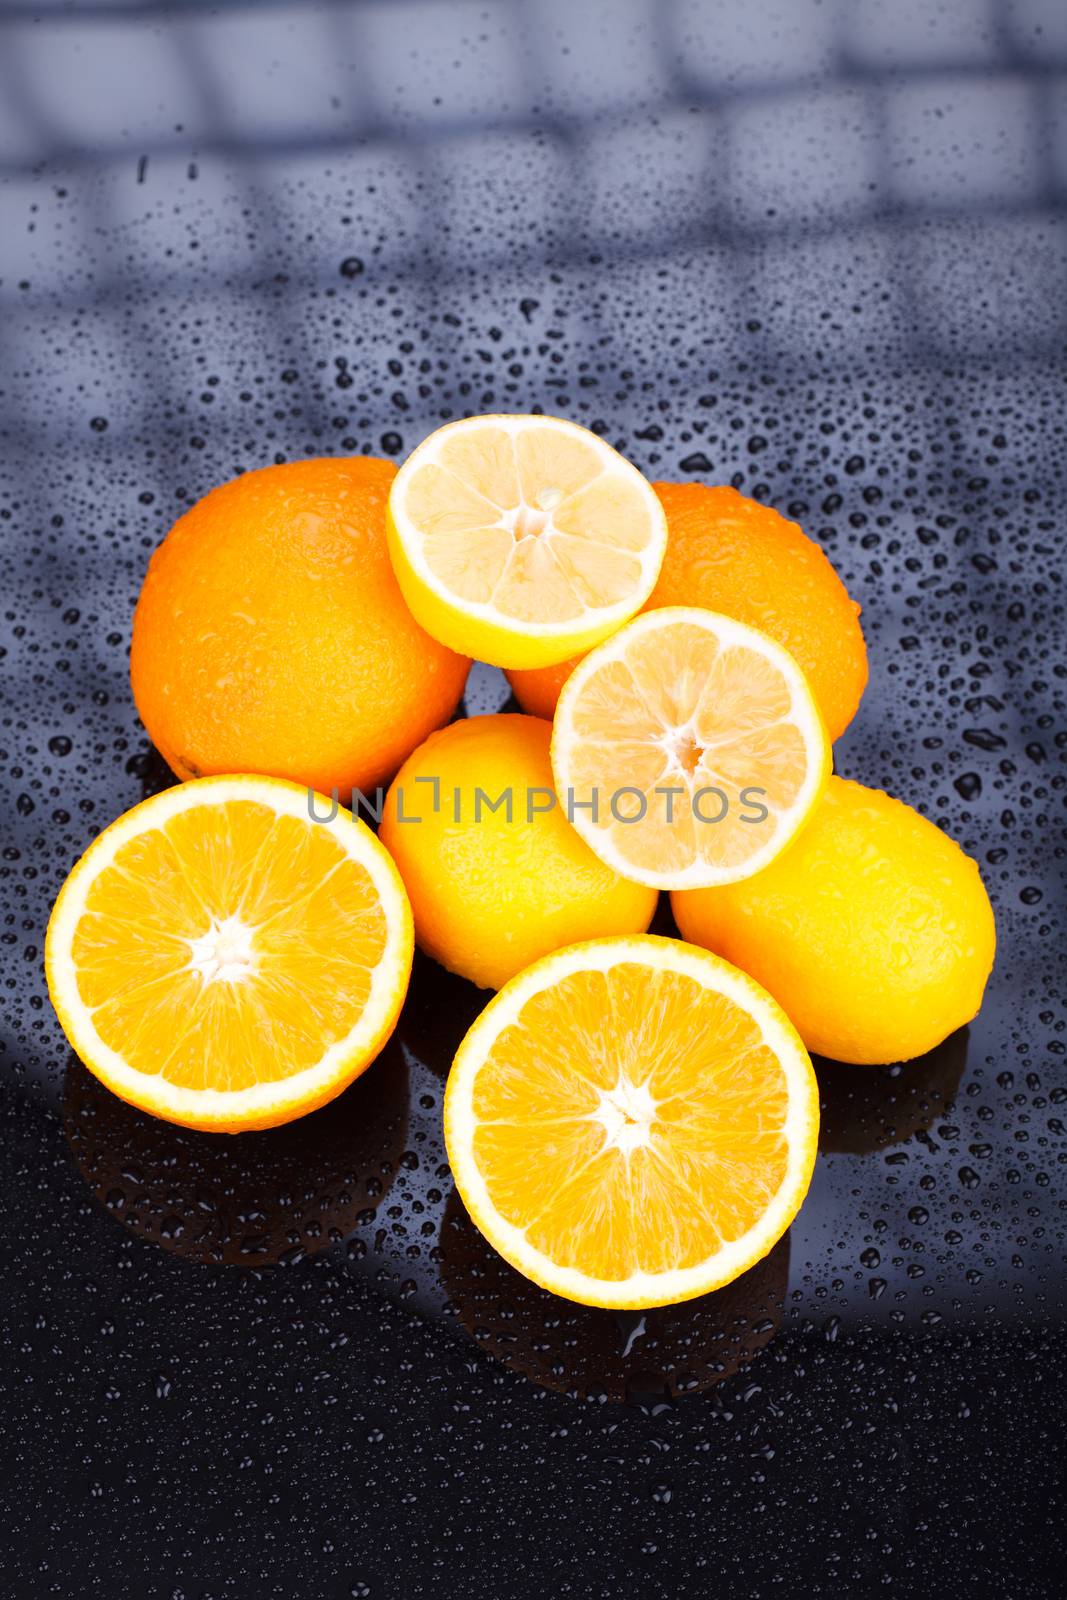 Delicious Citrus fruits by MilanMarkovic78